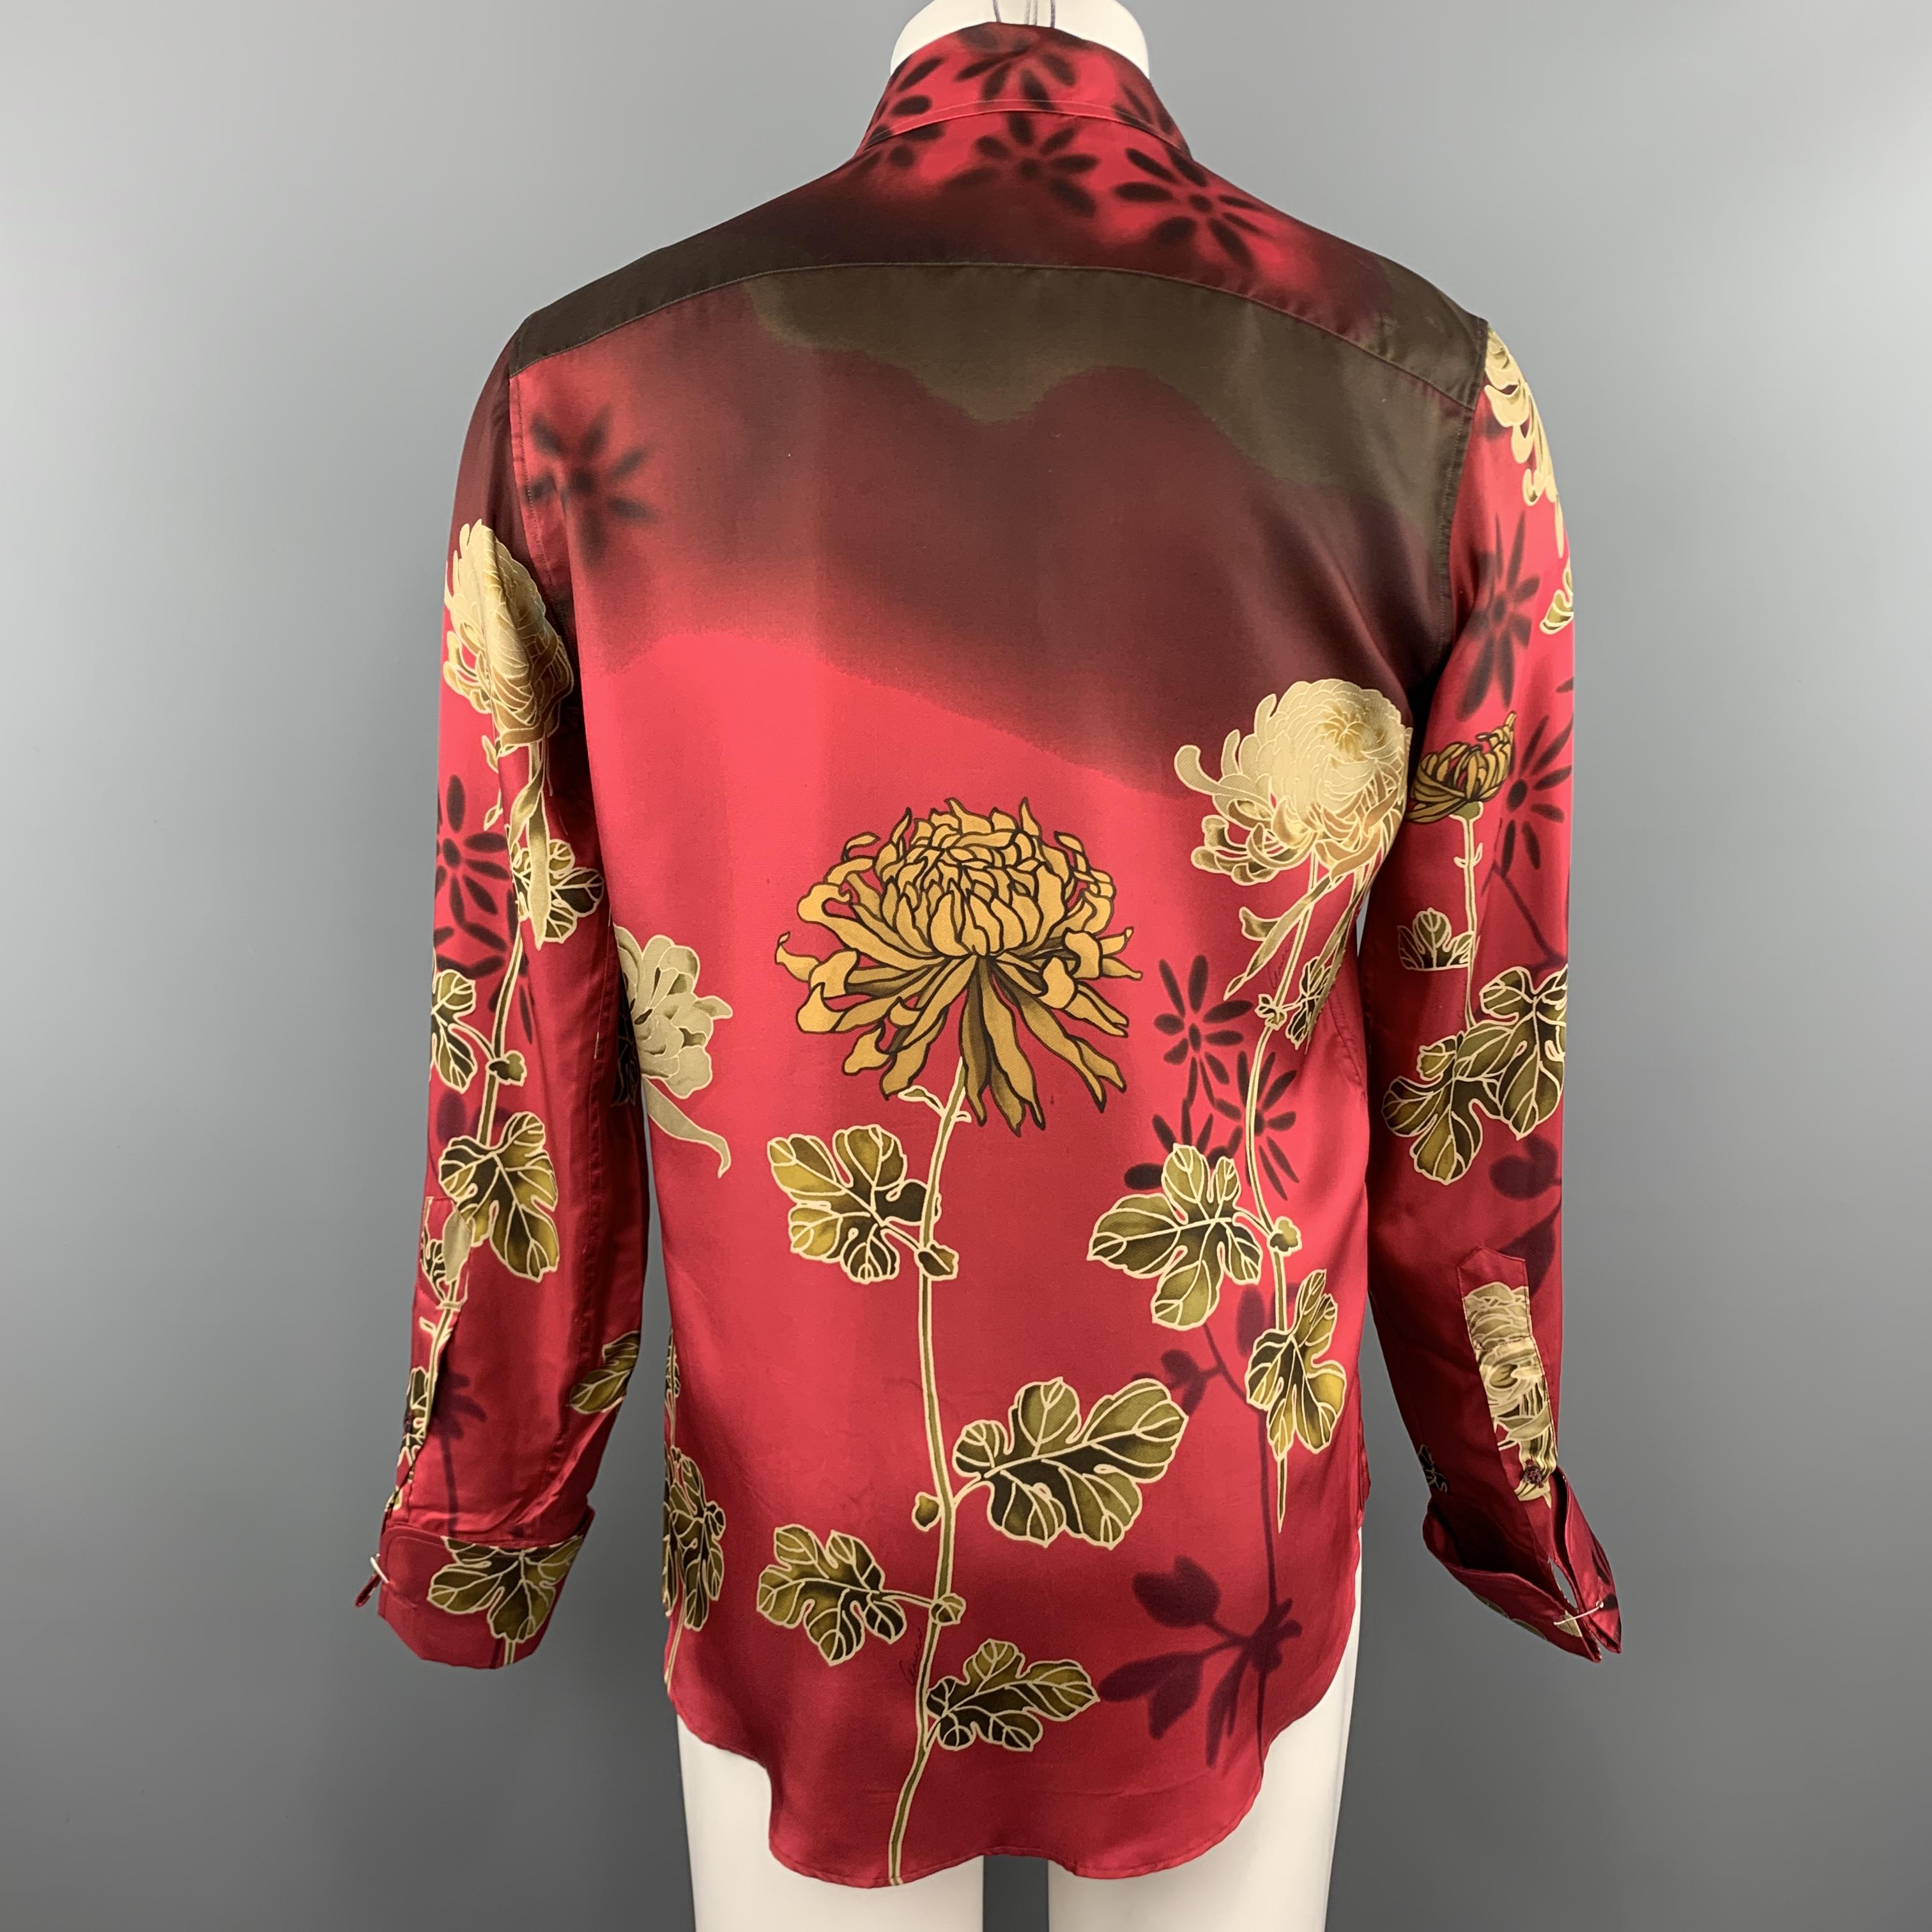  GUCCI by TOM FORD M Burgundy Floral Silk French Cuff Long Sleeve Shirt 1